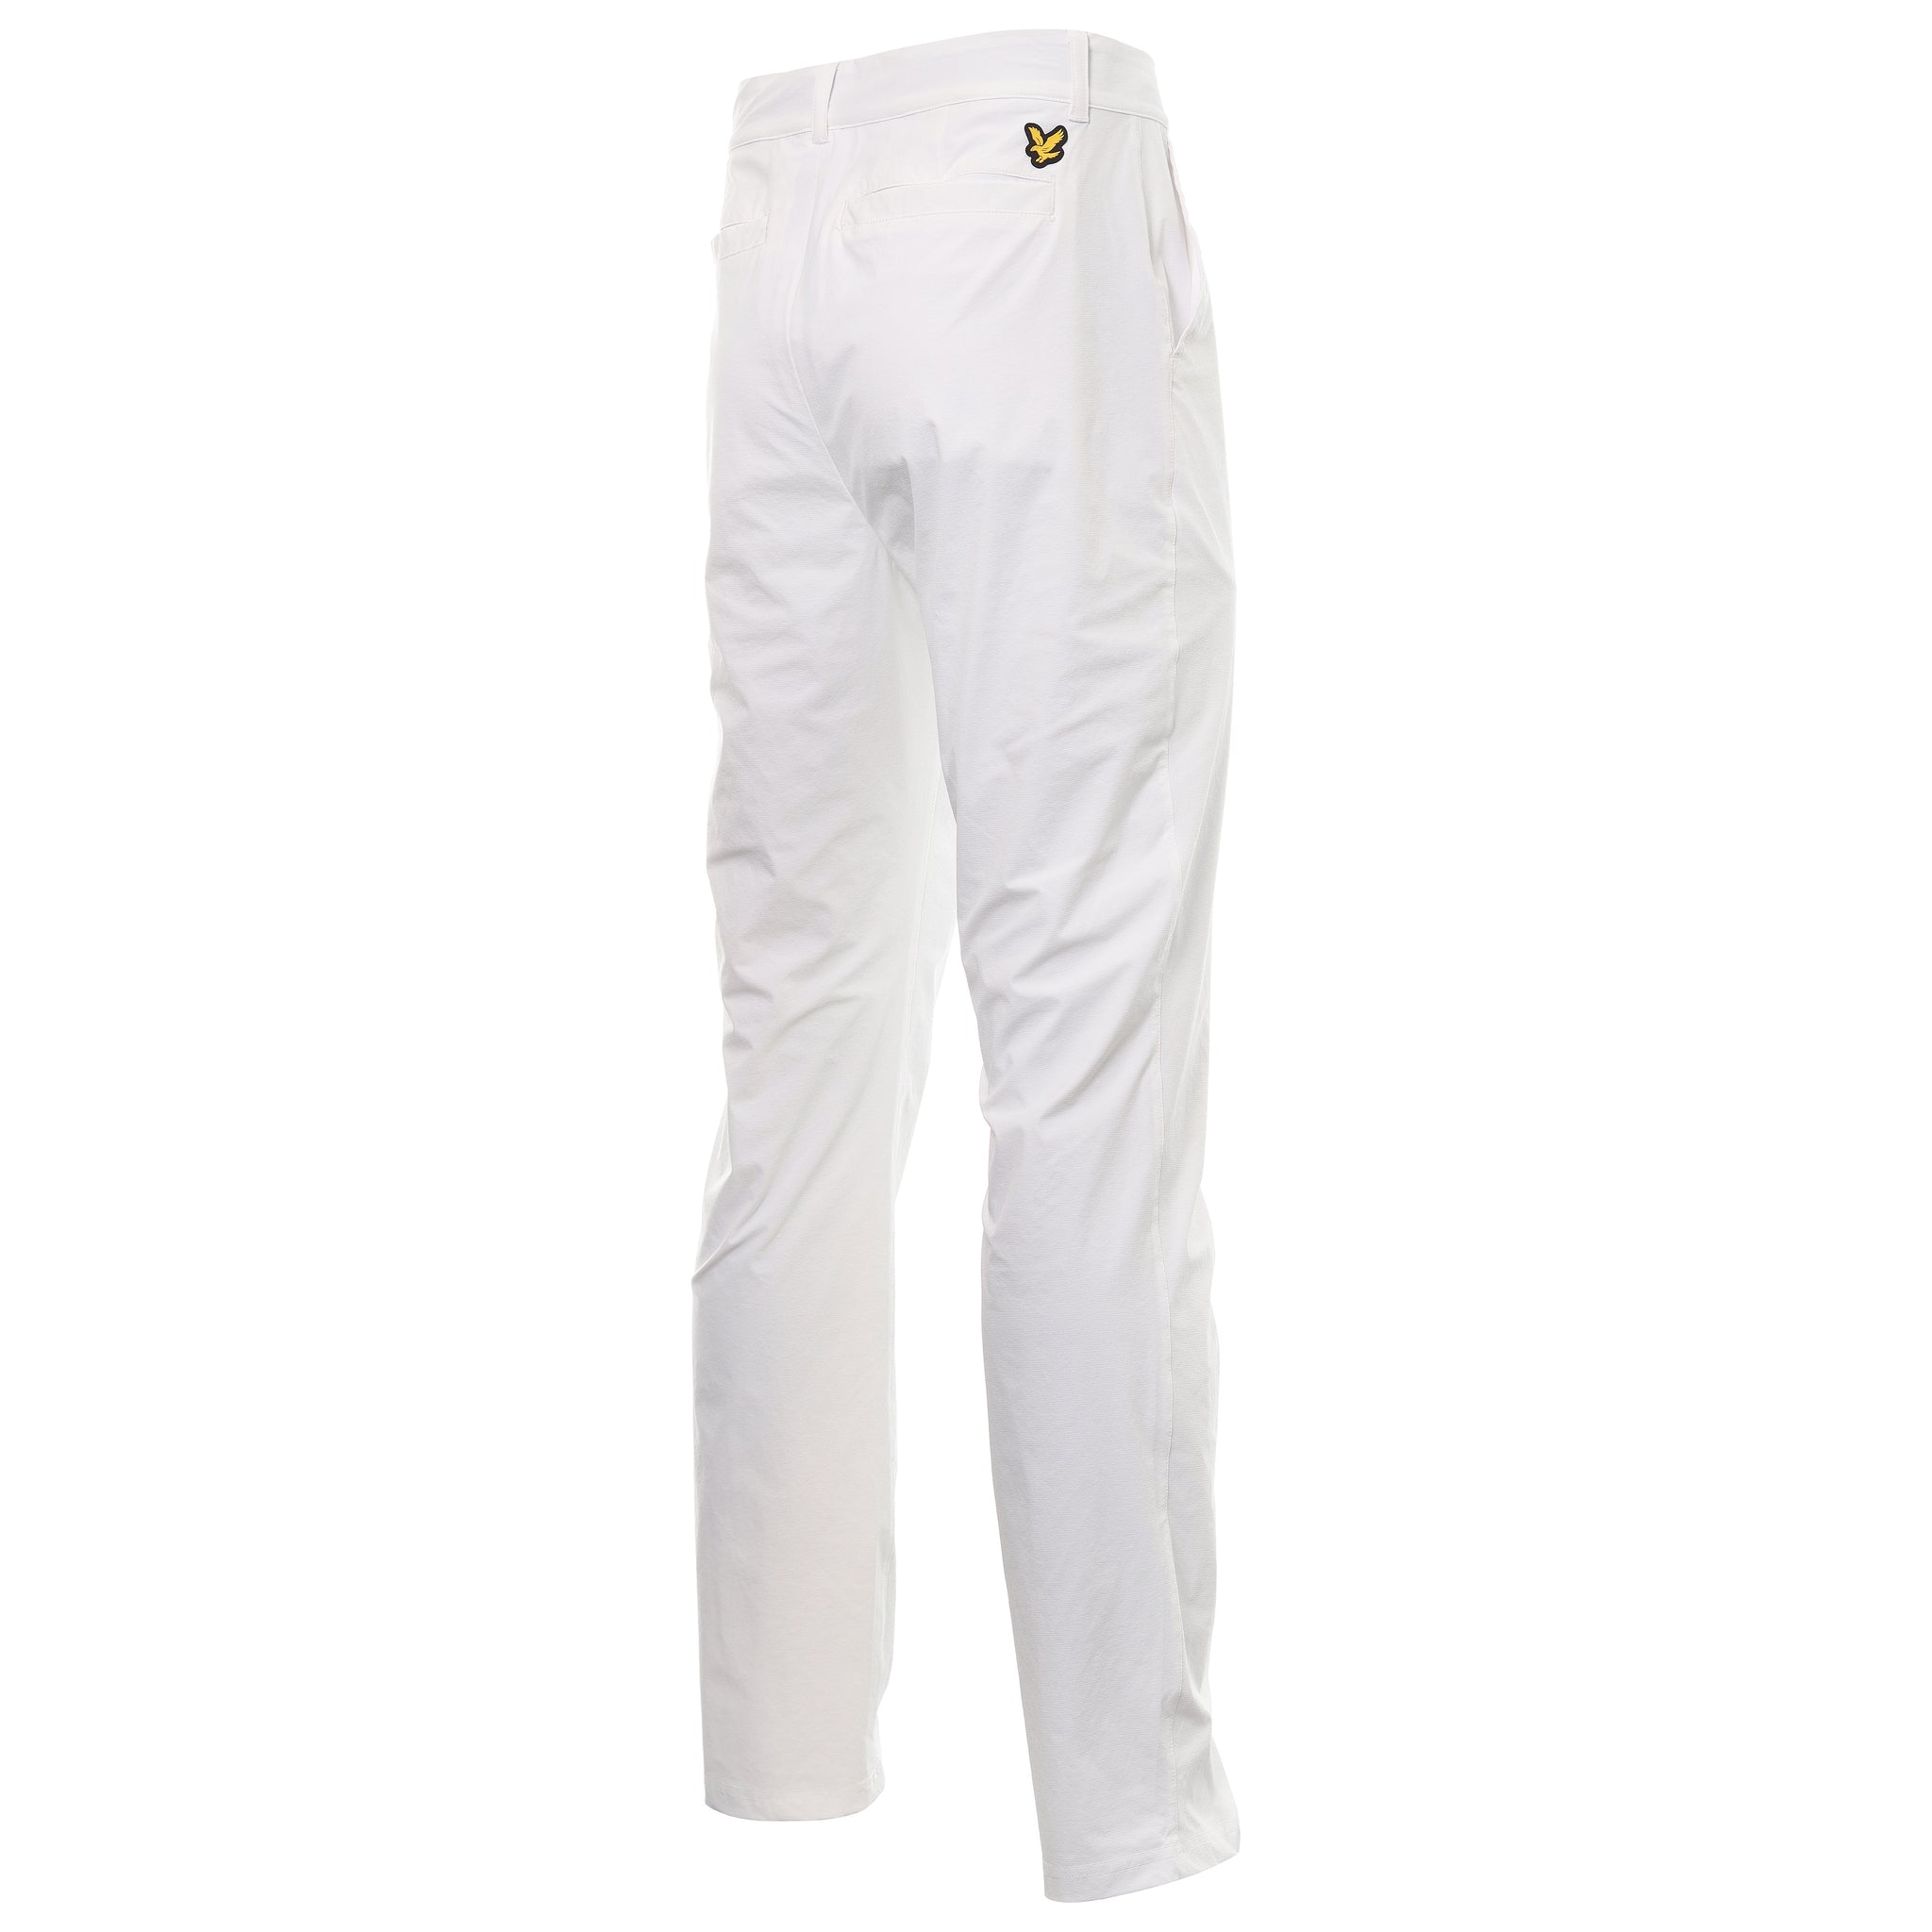 Lyle & Scott Golf Tech Trousers TR1462GC White 626 | Function18